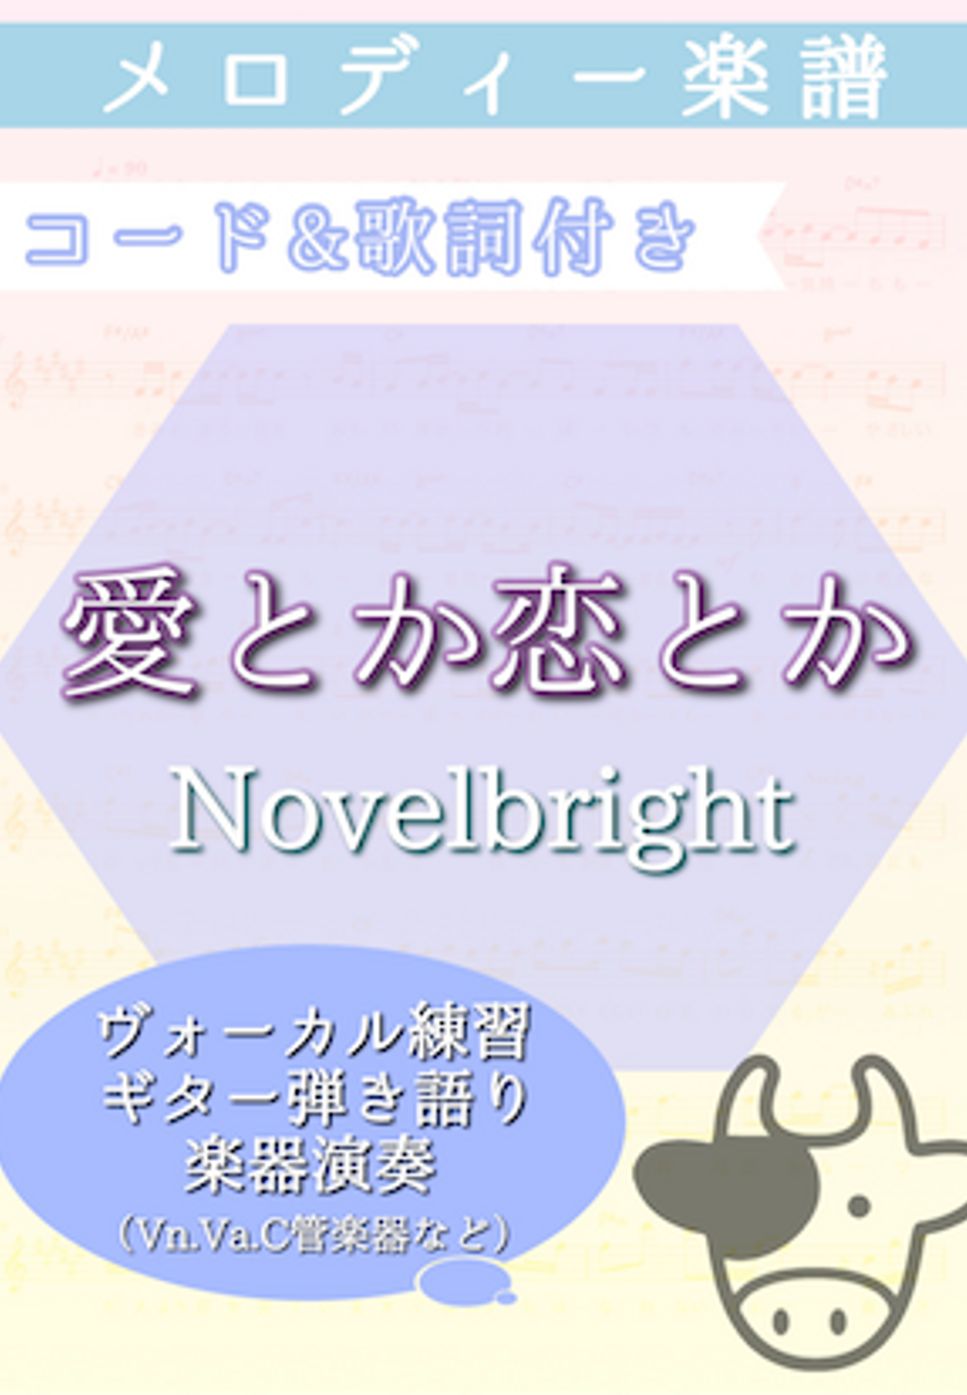 Novelbright - 愛とか恋とか (弾き語り・楽器ソロ演奏) by 牛武奏人